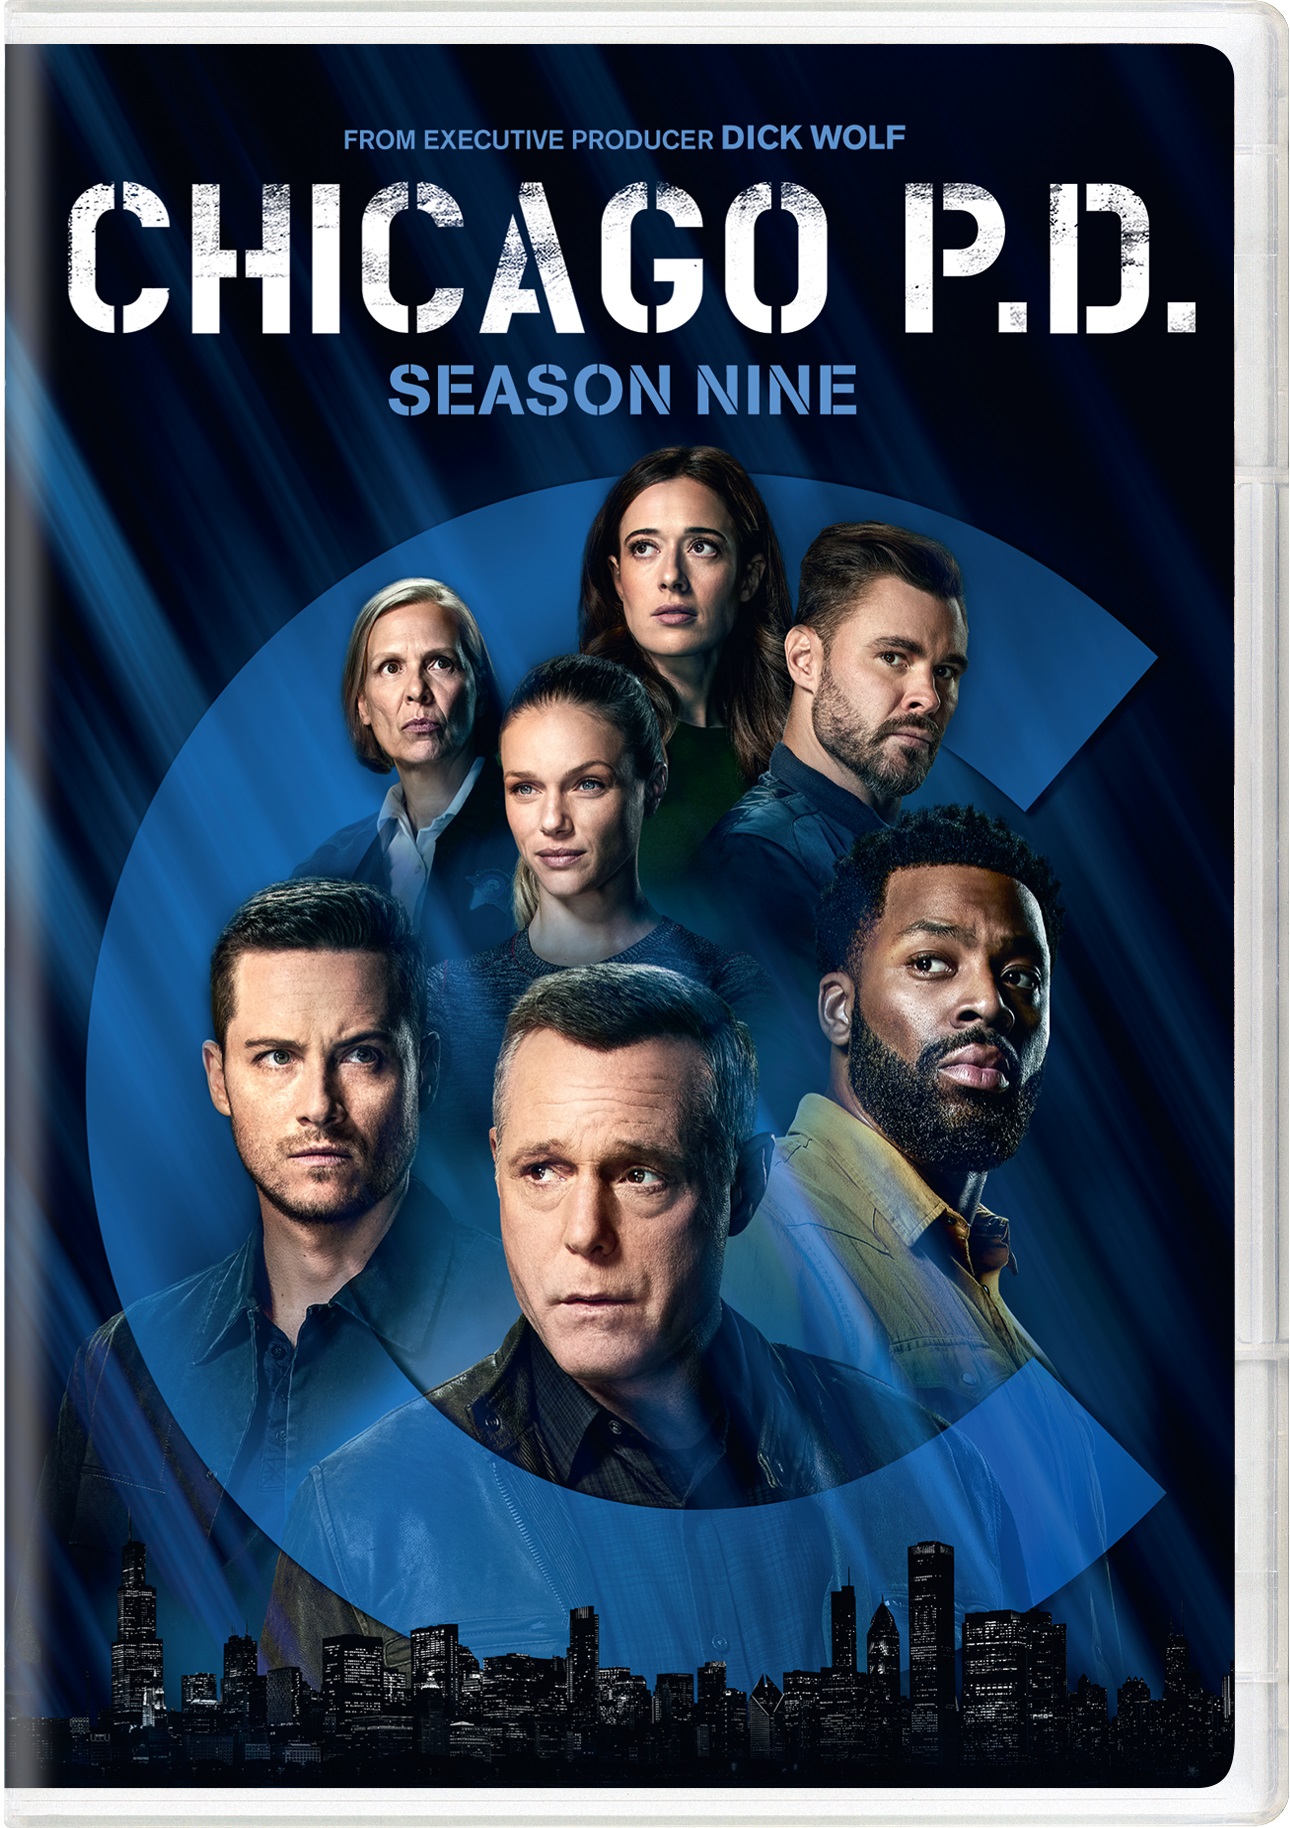 Chicago P.D.: Season Nine (Box Set) - DVD [ 2021 ]  - Drama Television On DVD - TV Shows On GRUV